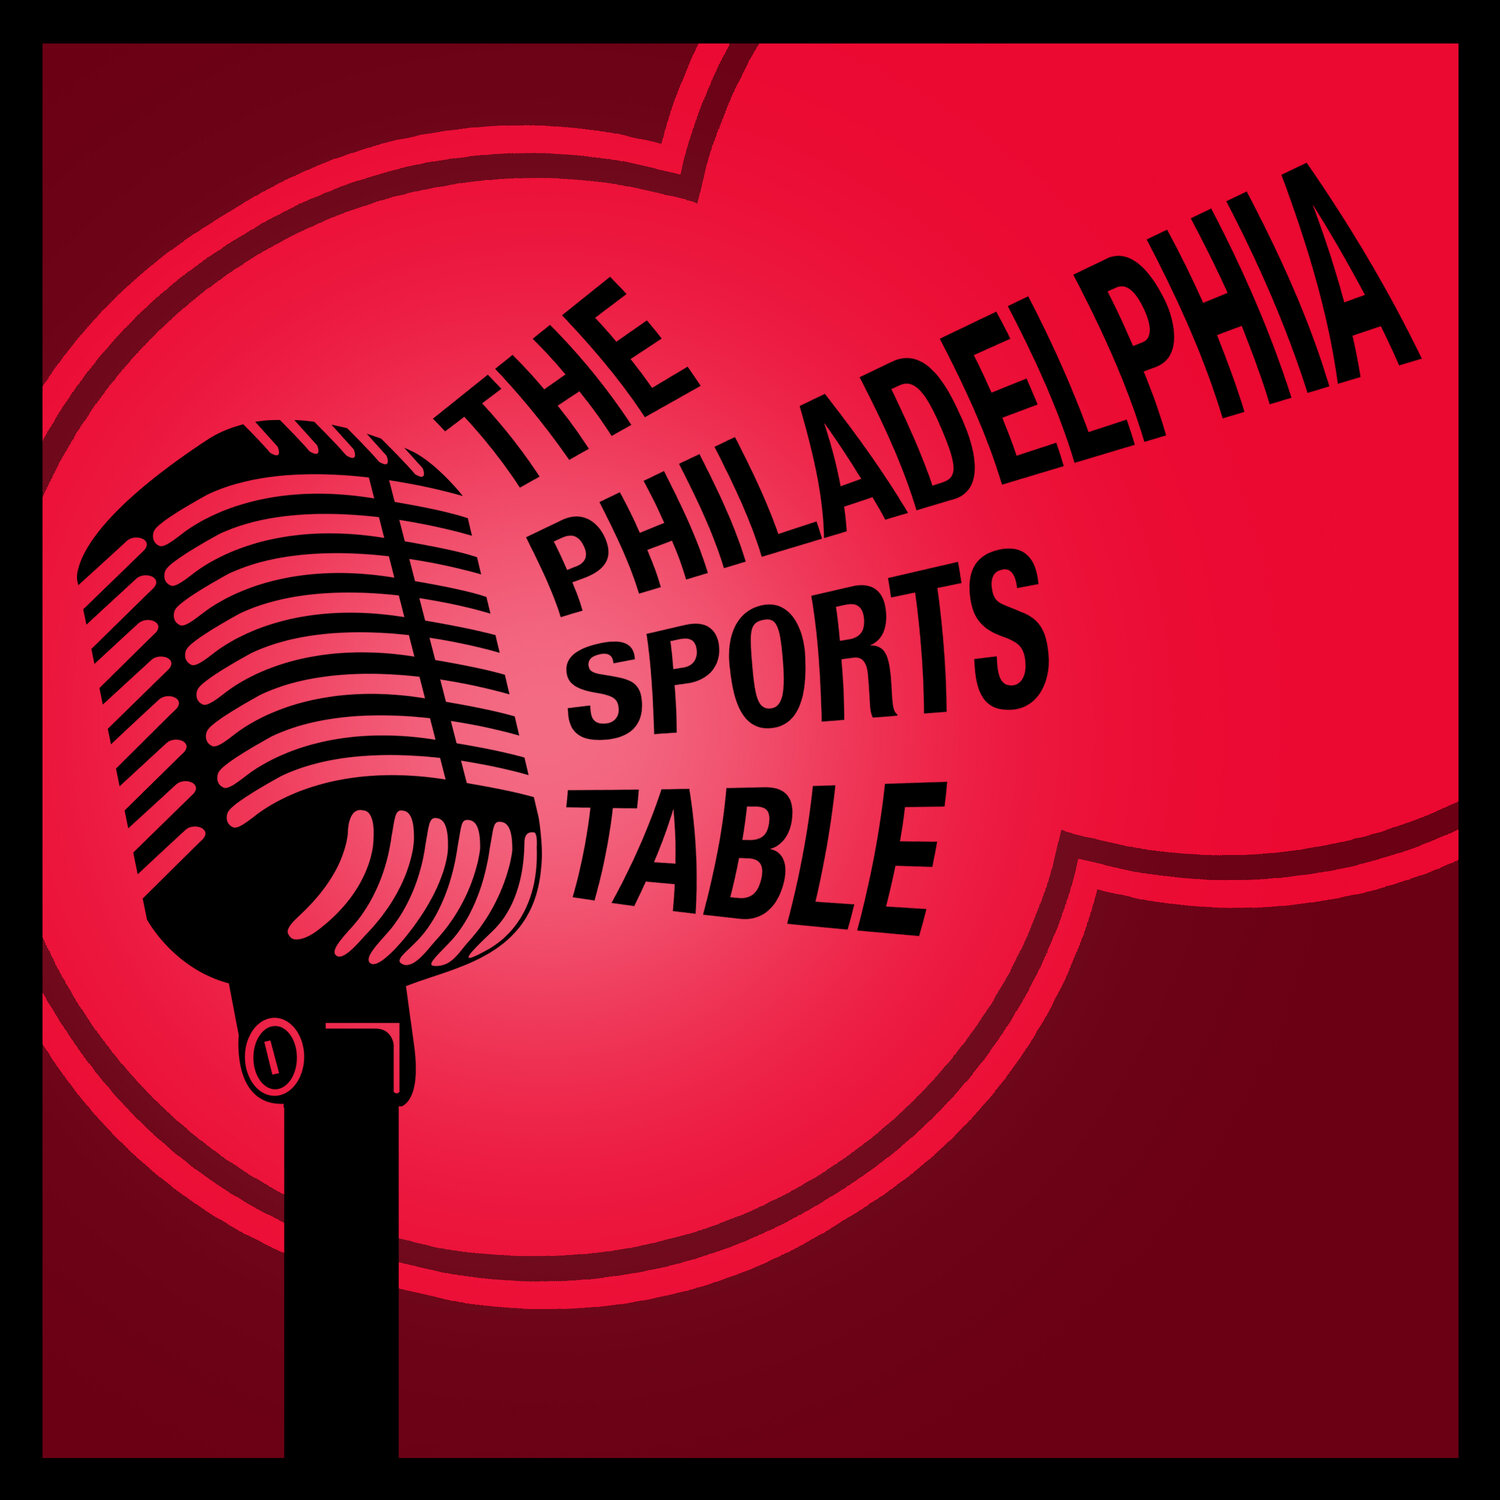 The Philadelphia Sports Table